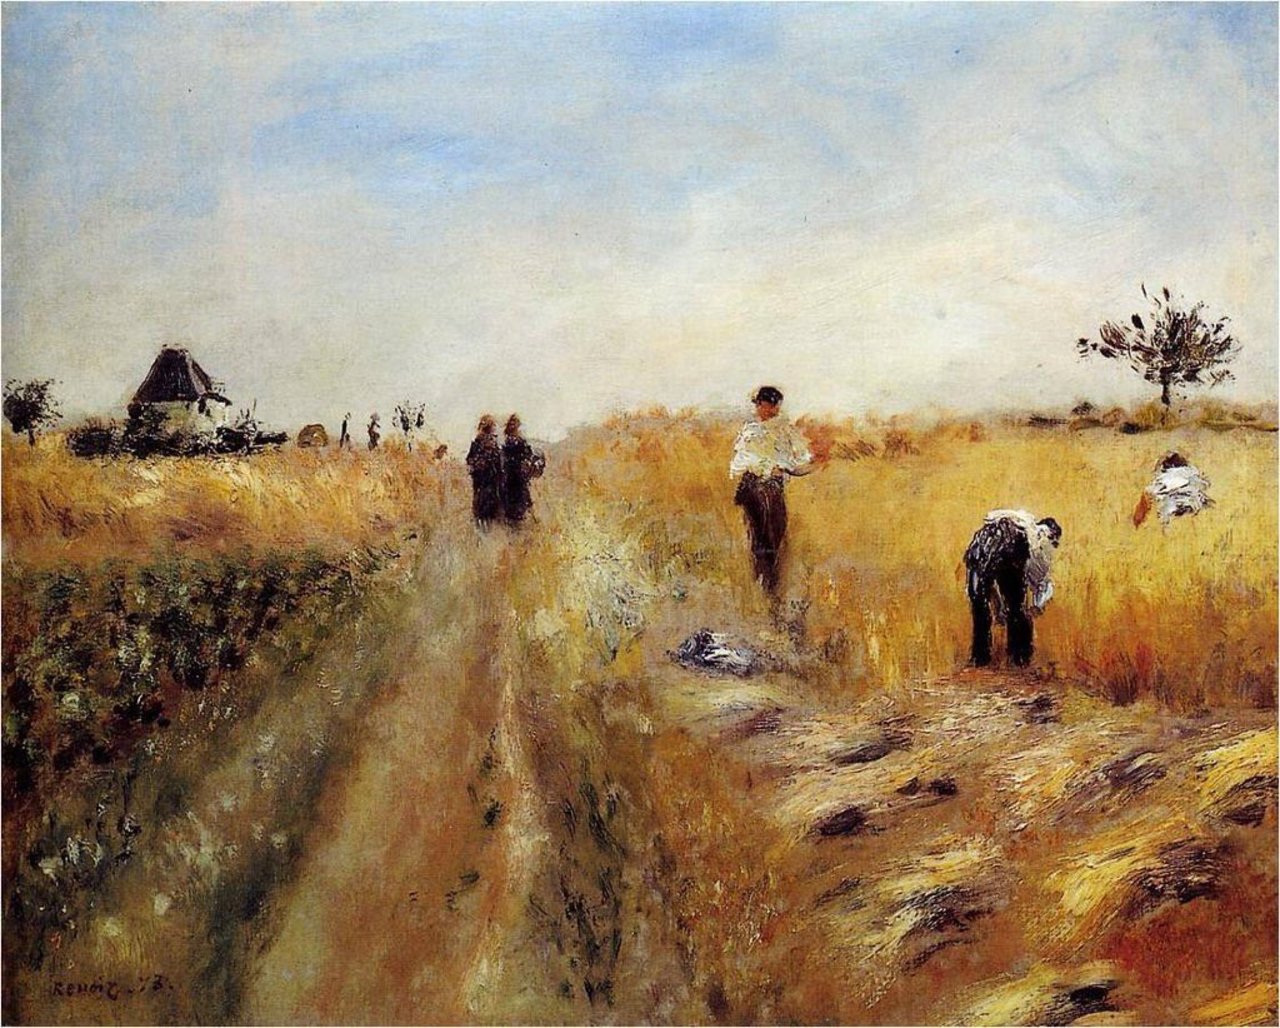 Pierre-Auguste #RENOIR, "THE HARVESTERS" 1873 #art #artwit #twitart #iloveart #artist #painting https://t.co/Oi5NsciJ3v